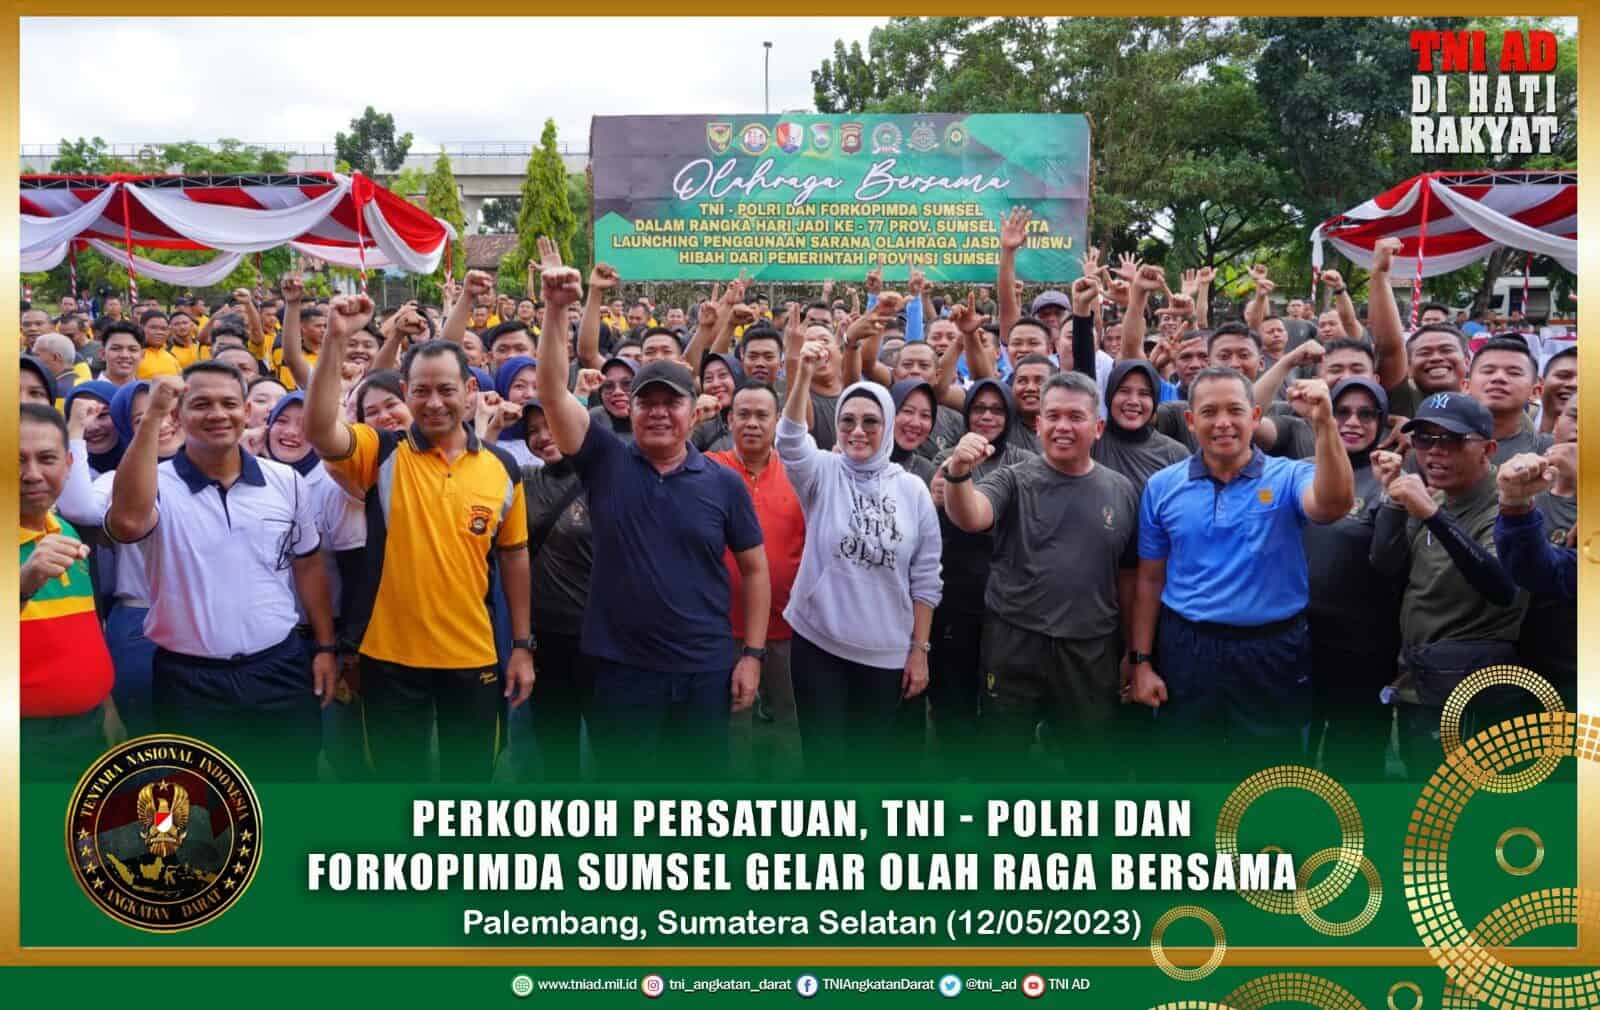 Perkokoh Persatuan, TNI - POLRI dan Forkopimda Sumsel Gelar Olah Raga Bersama